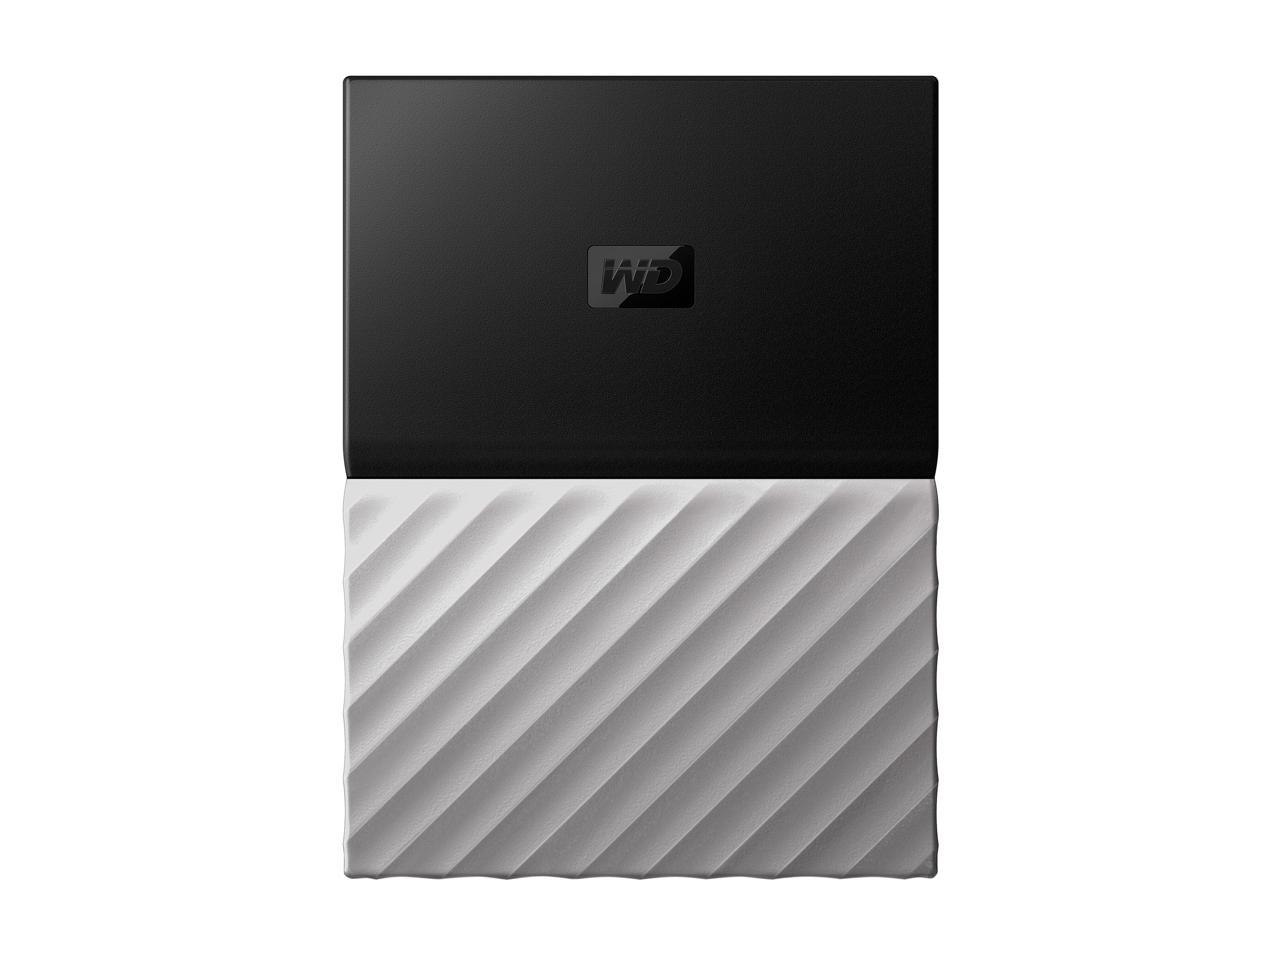 WD 4TB My Passport Ultra Portable Storage with Metal Finish USB 3.0 Model WDBFKT0040BGY-WESN Black - Gray